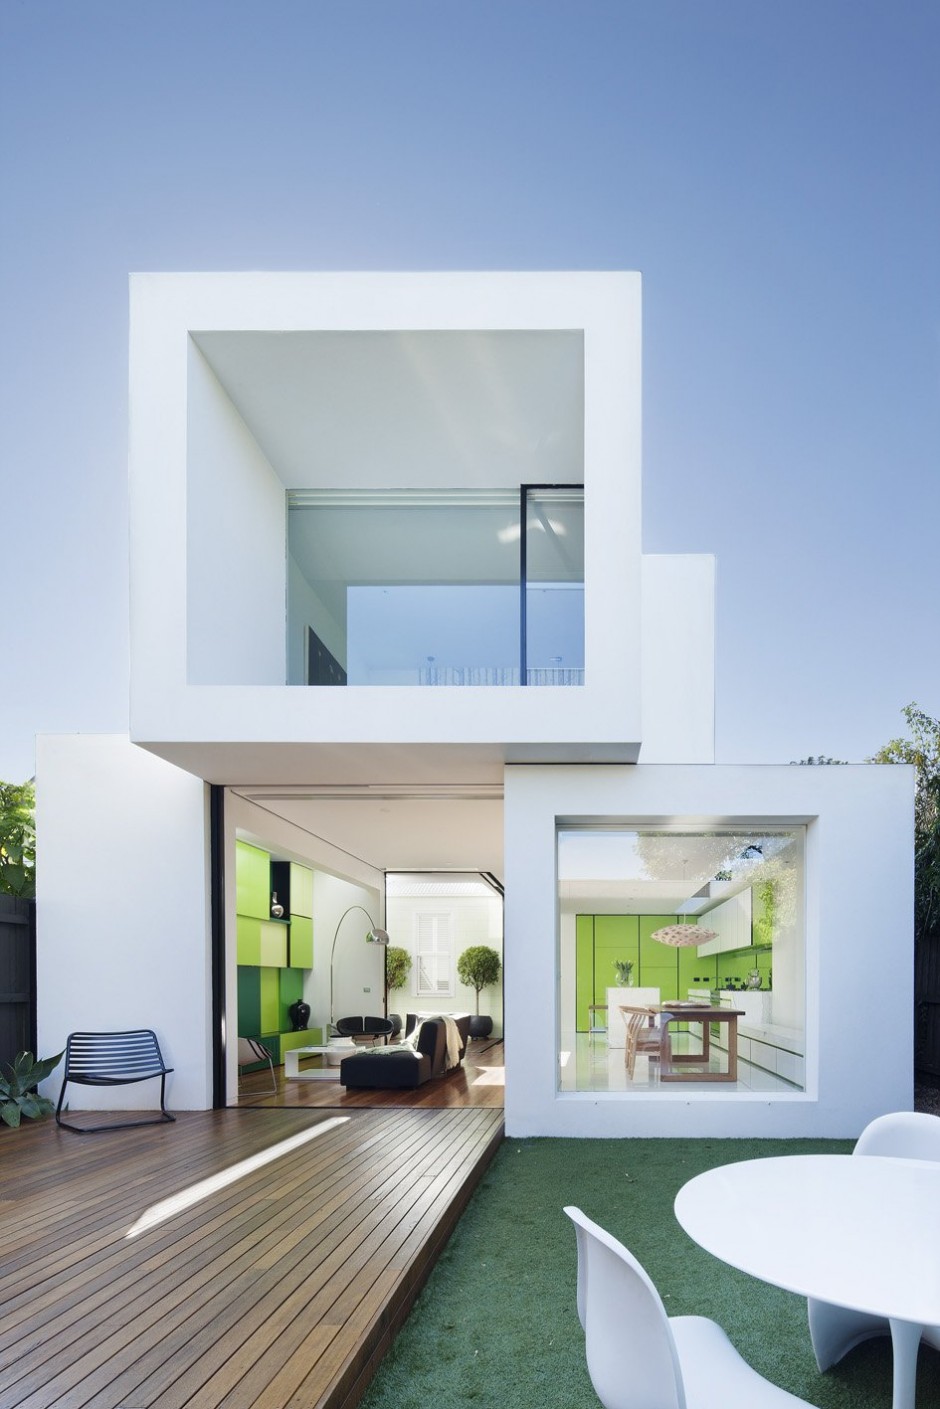 Small minimalist house facade